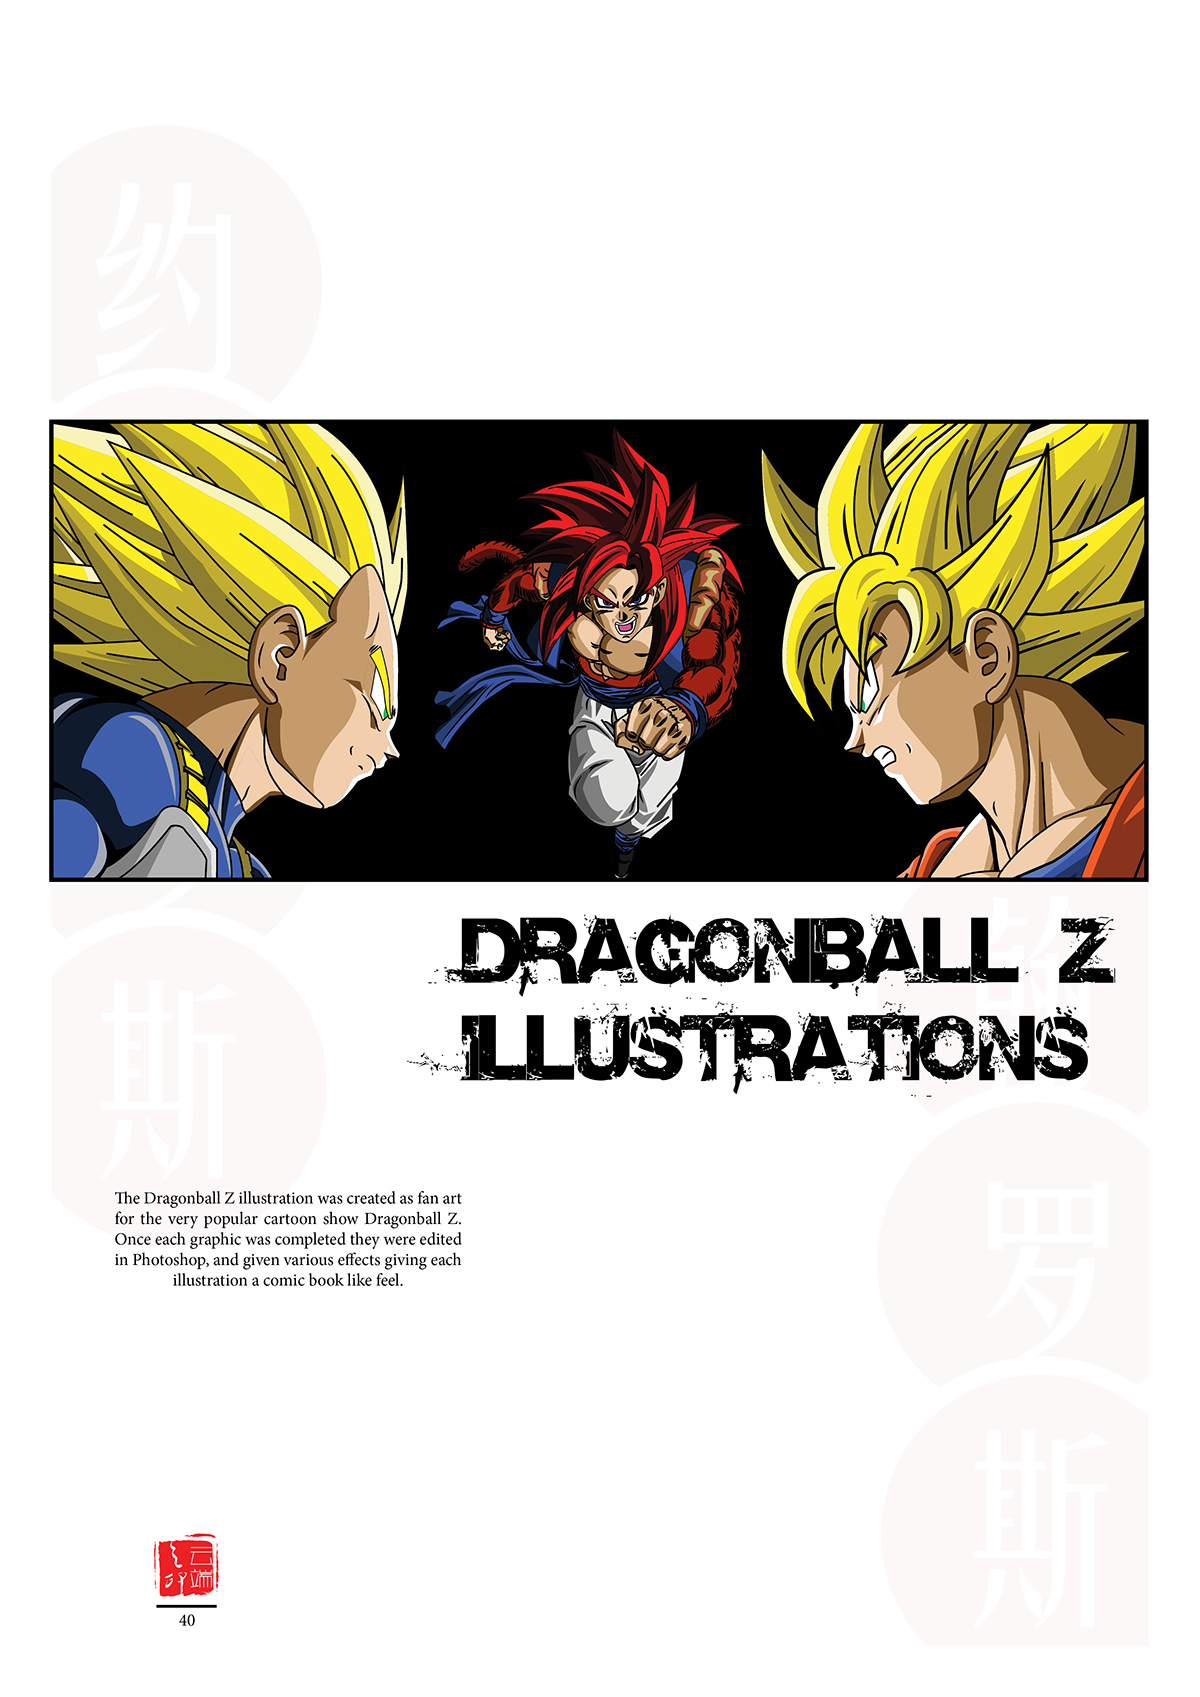 Dragonball Z anime